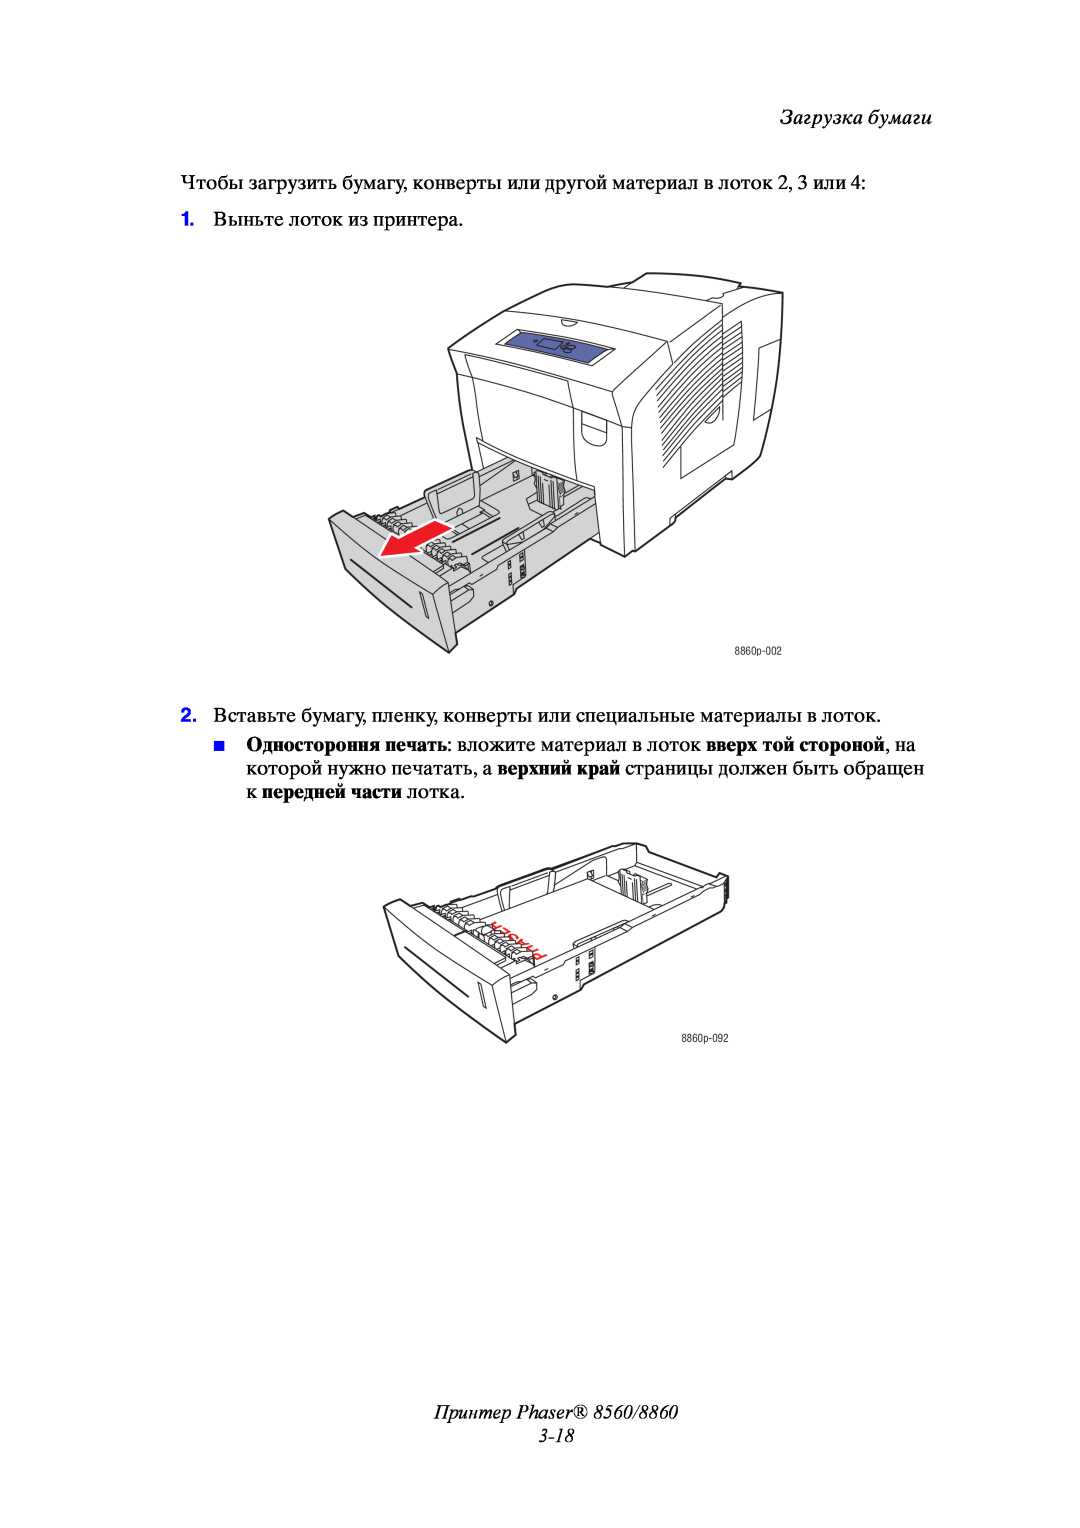 Xerox manual Принтер Phaser 8560/8860 3-18, Загрузка бумаги, 1. Выньте лоток из принтера, 8860p-002, 8860p-092 